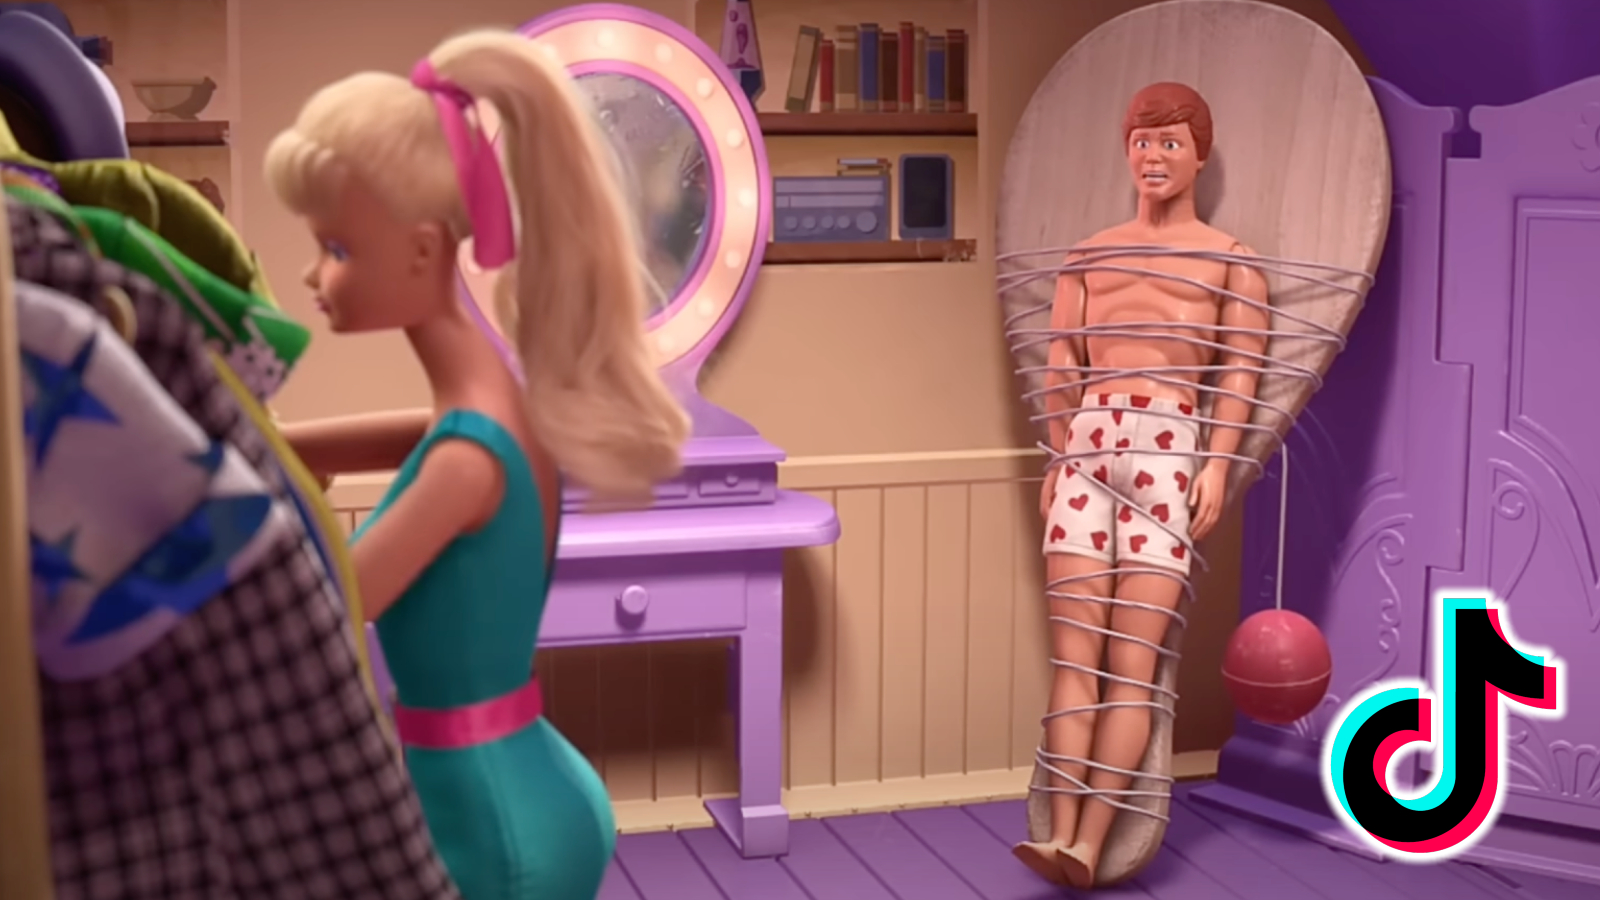 TikTok baffled by bizarre “Oh Barbie” auditory illusion